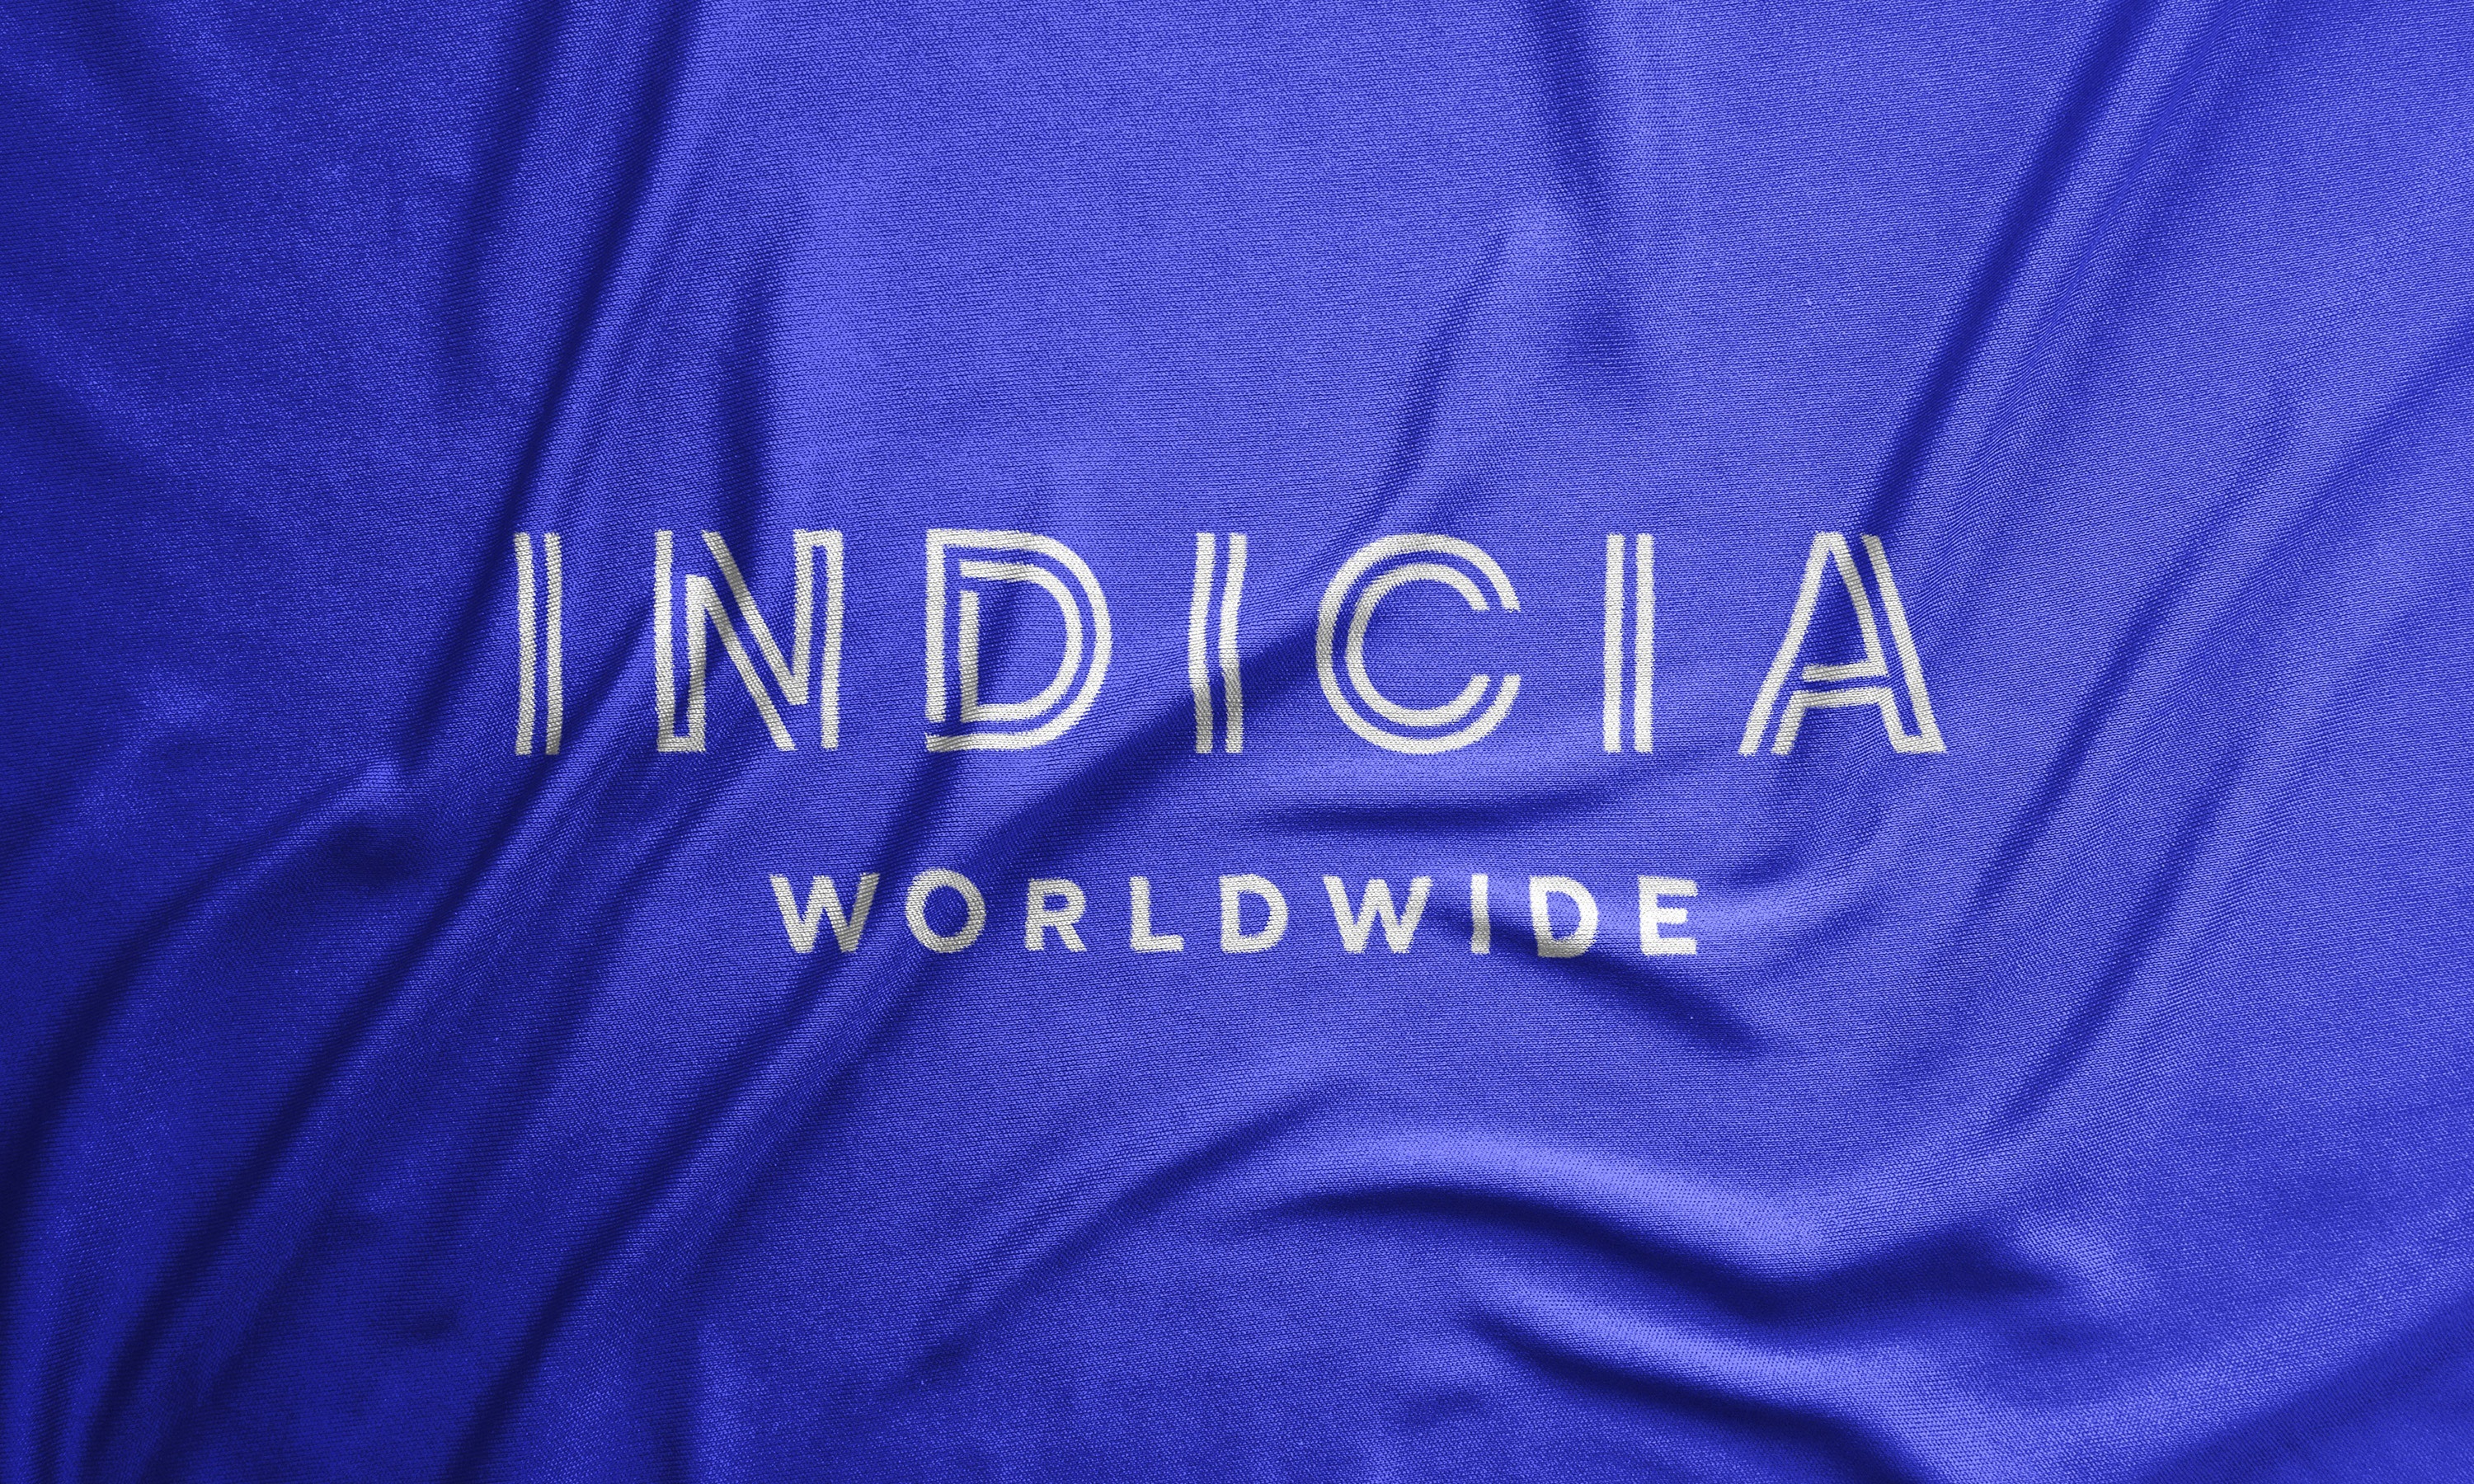 Indicia worldwide flag wordmarque